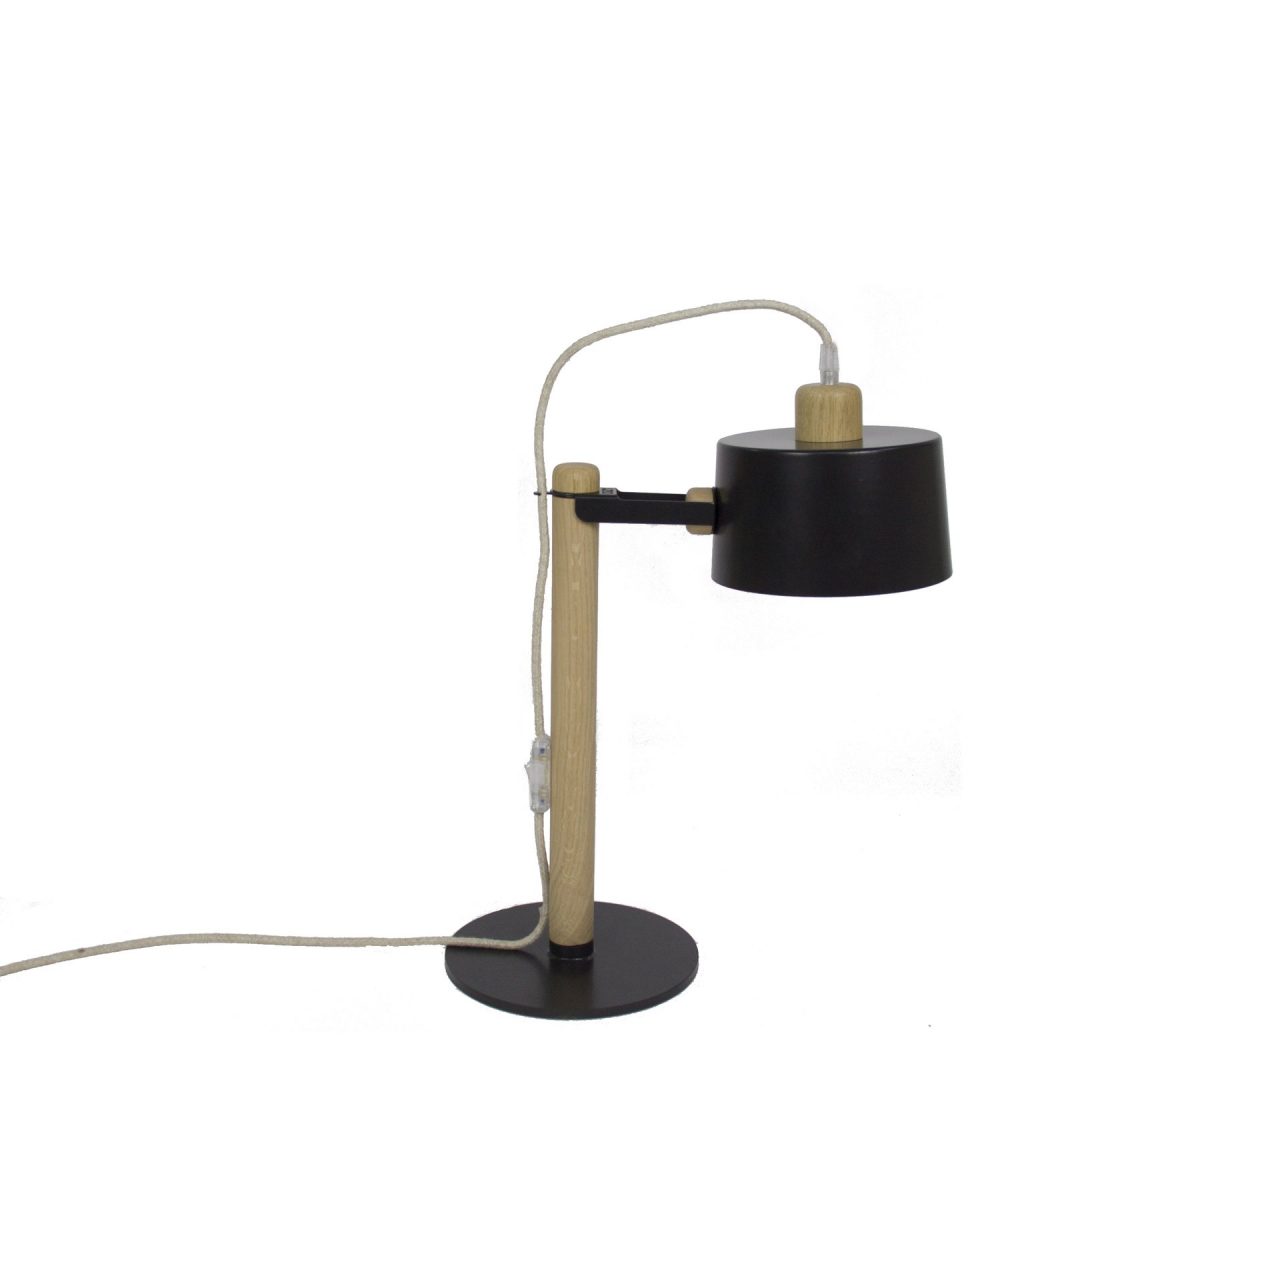 Lampe - lampe de bureau - lampe de chevet. Fabrication française.